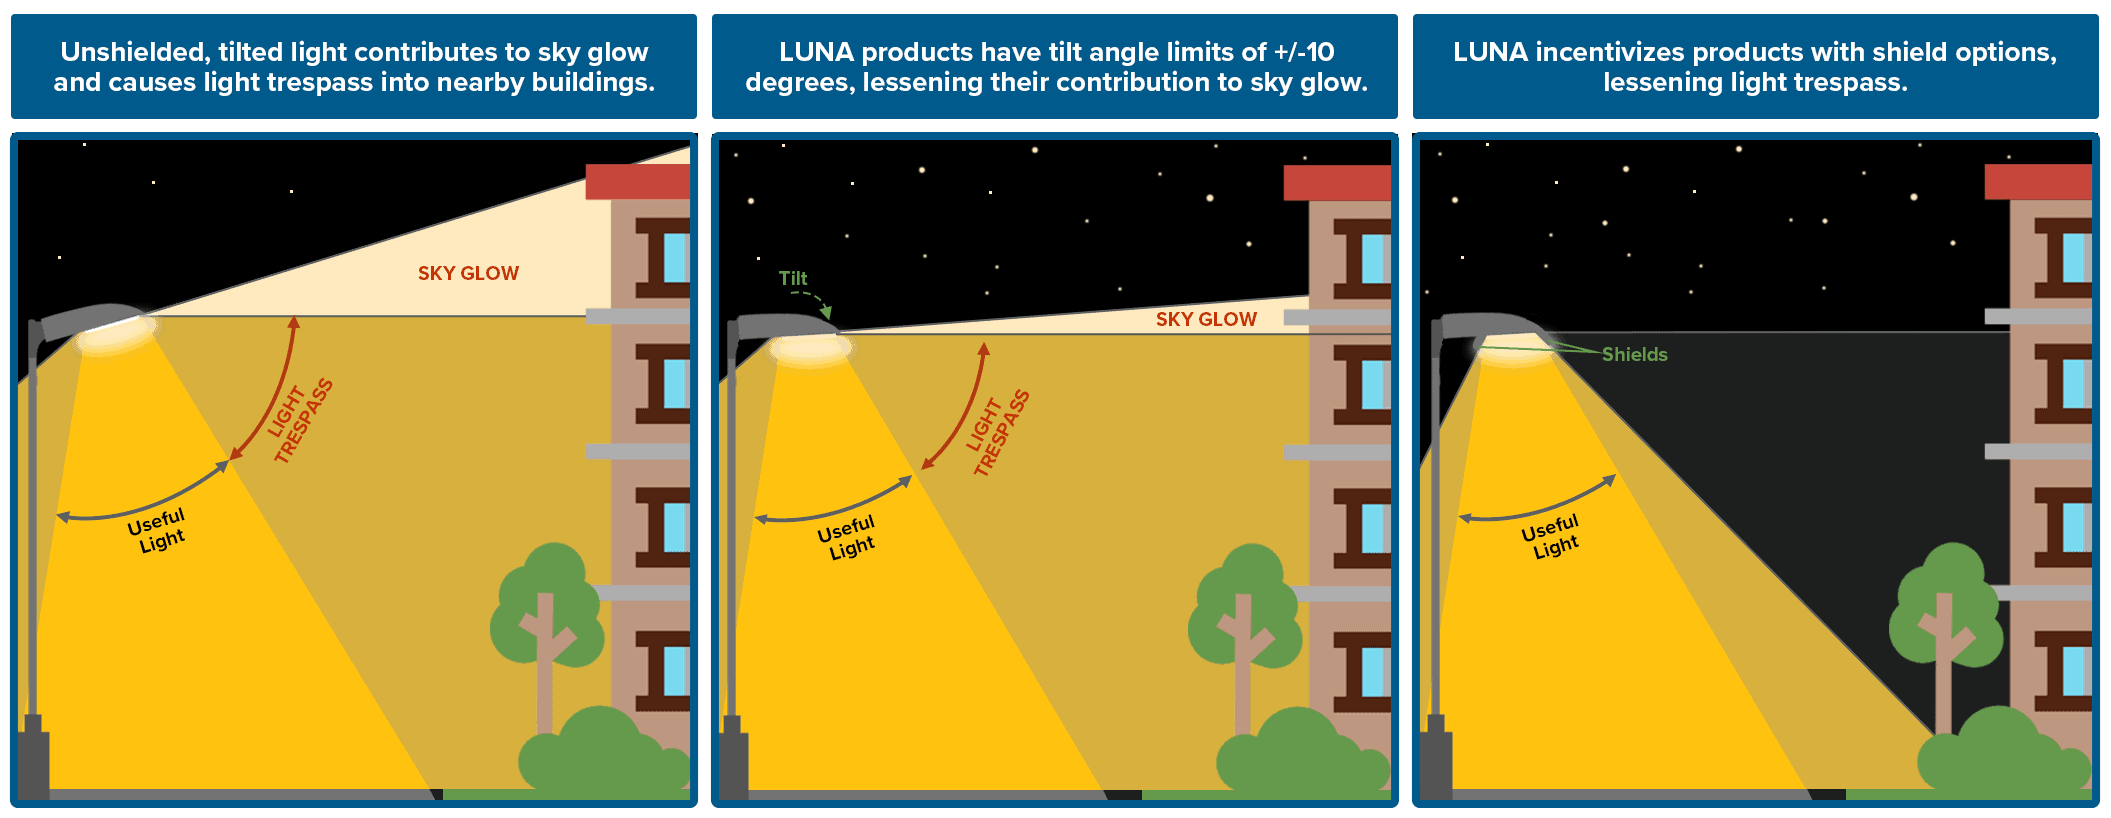 How LUNA requirements help lessen sky glow and light trespass